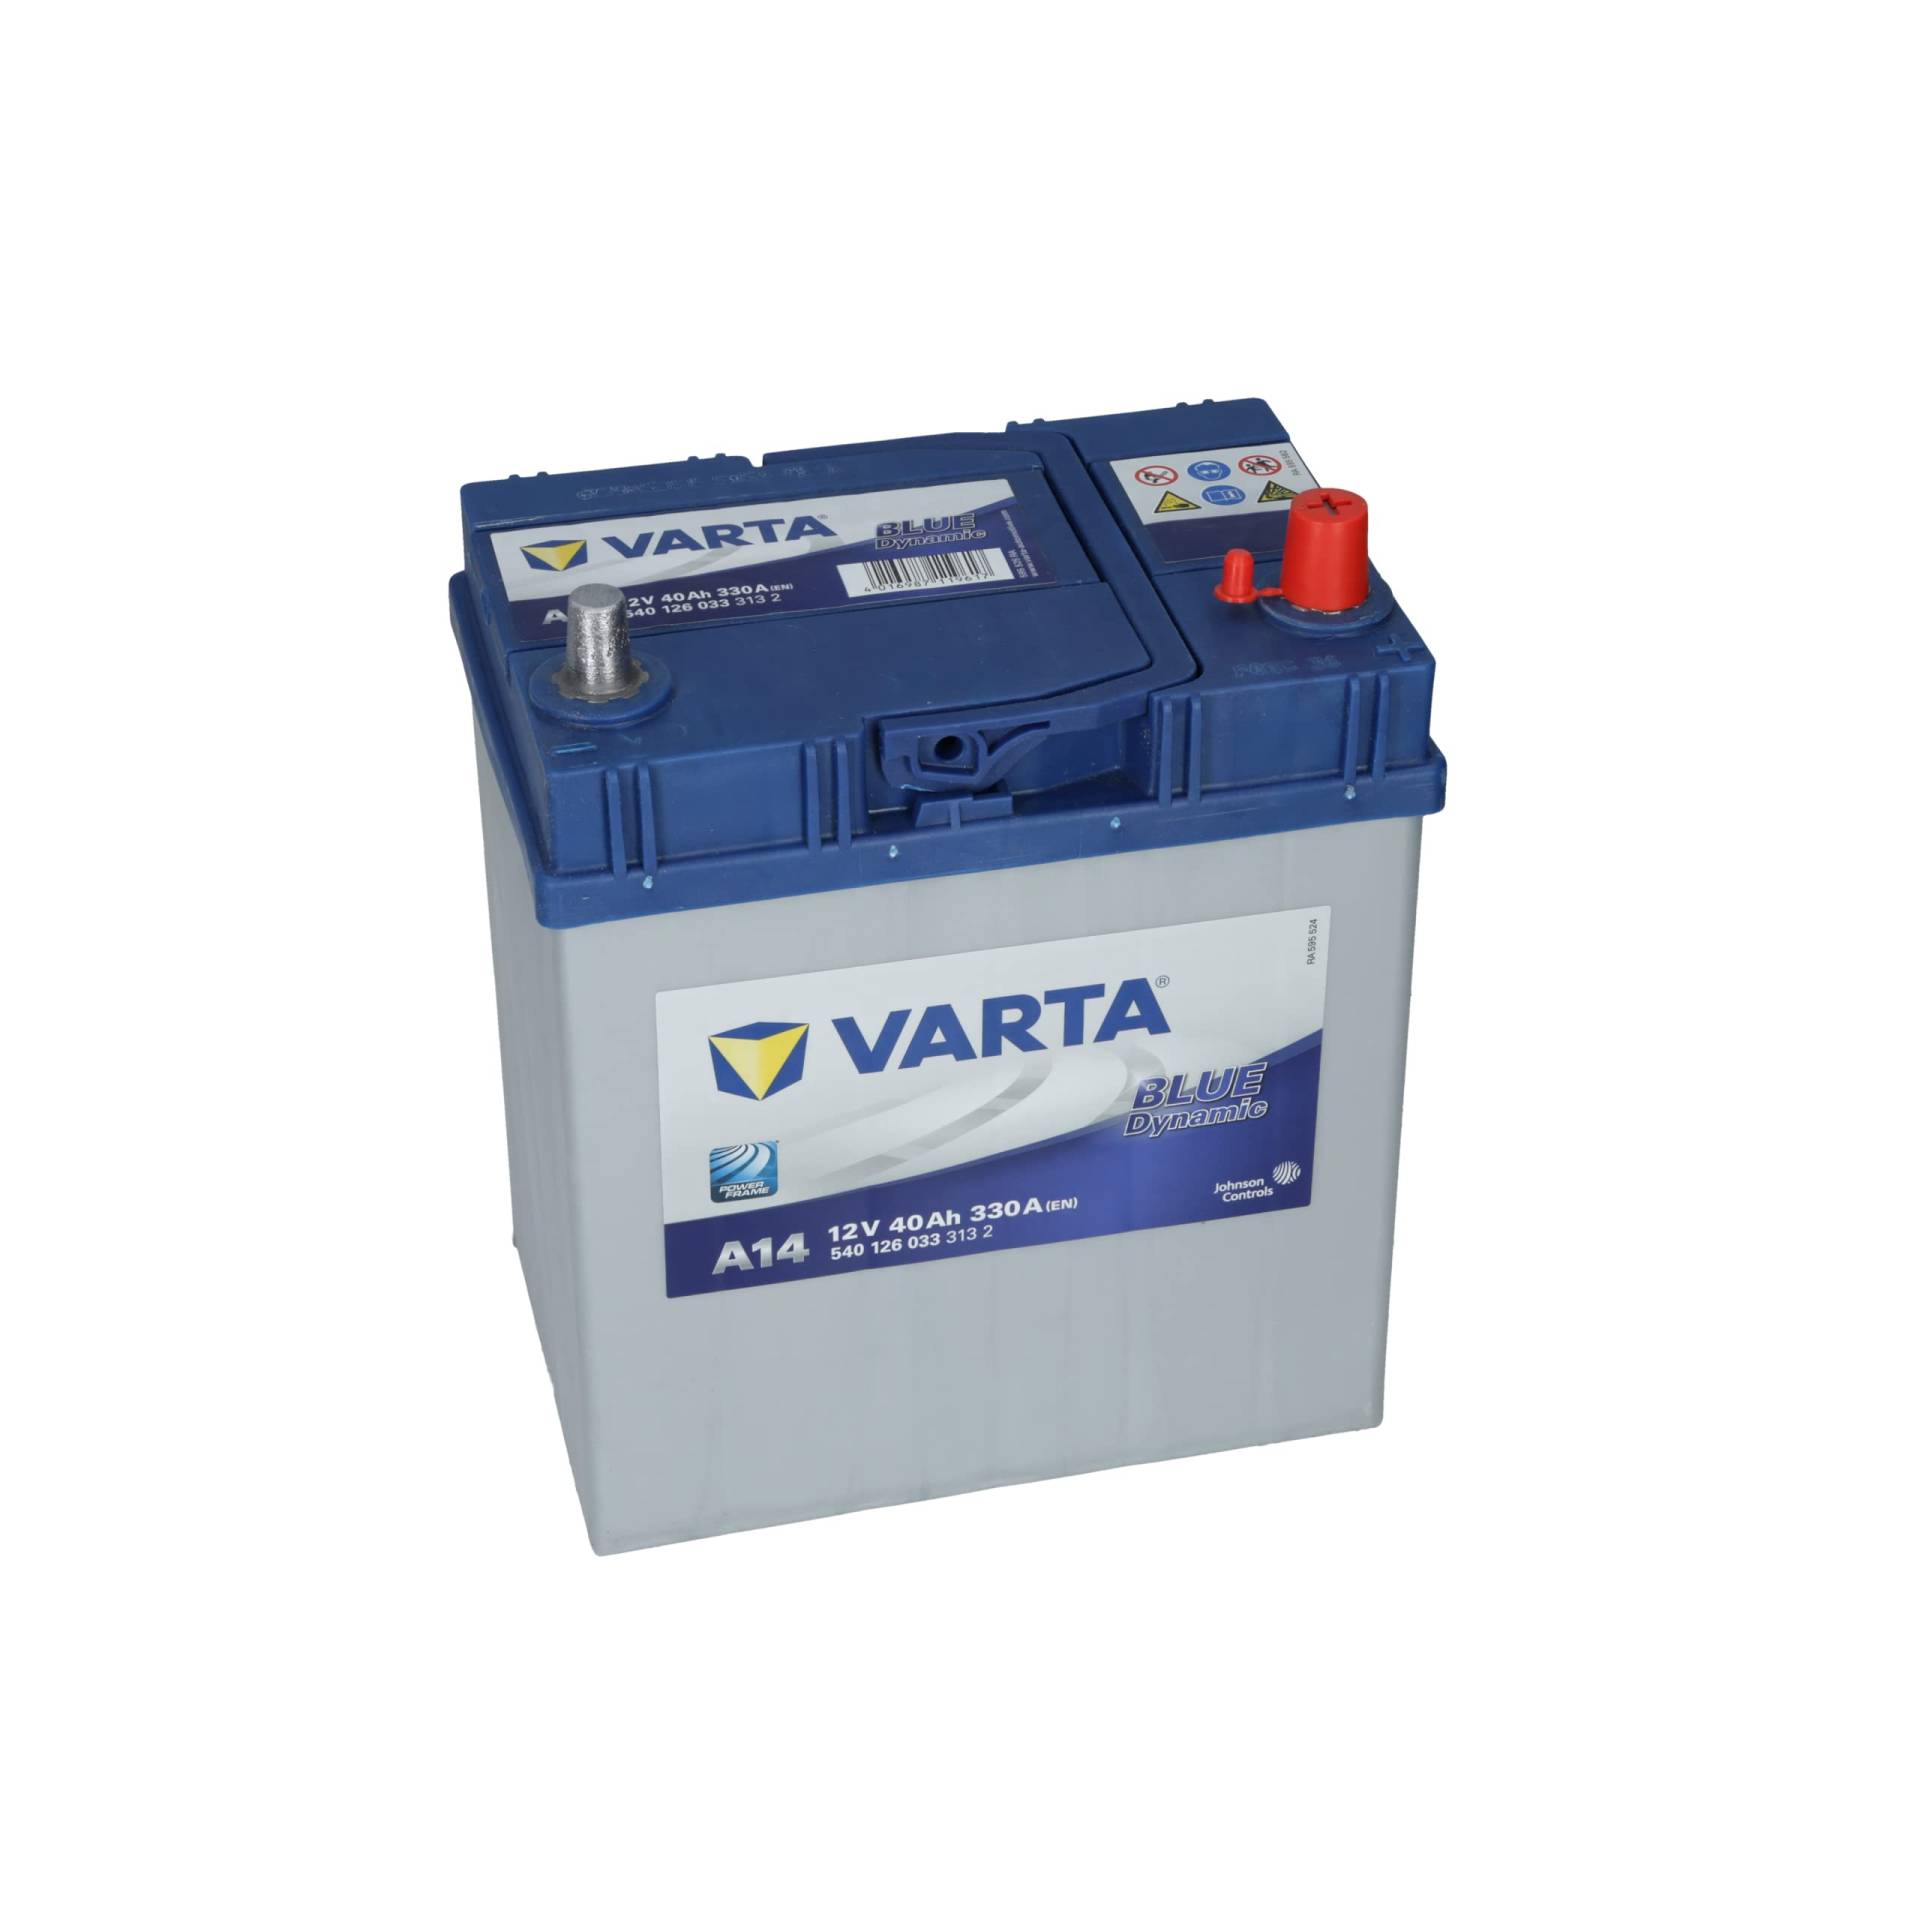 VARTA A14 Blue Dynamic / Autobatterie / Batterie 40Ah von Varta